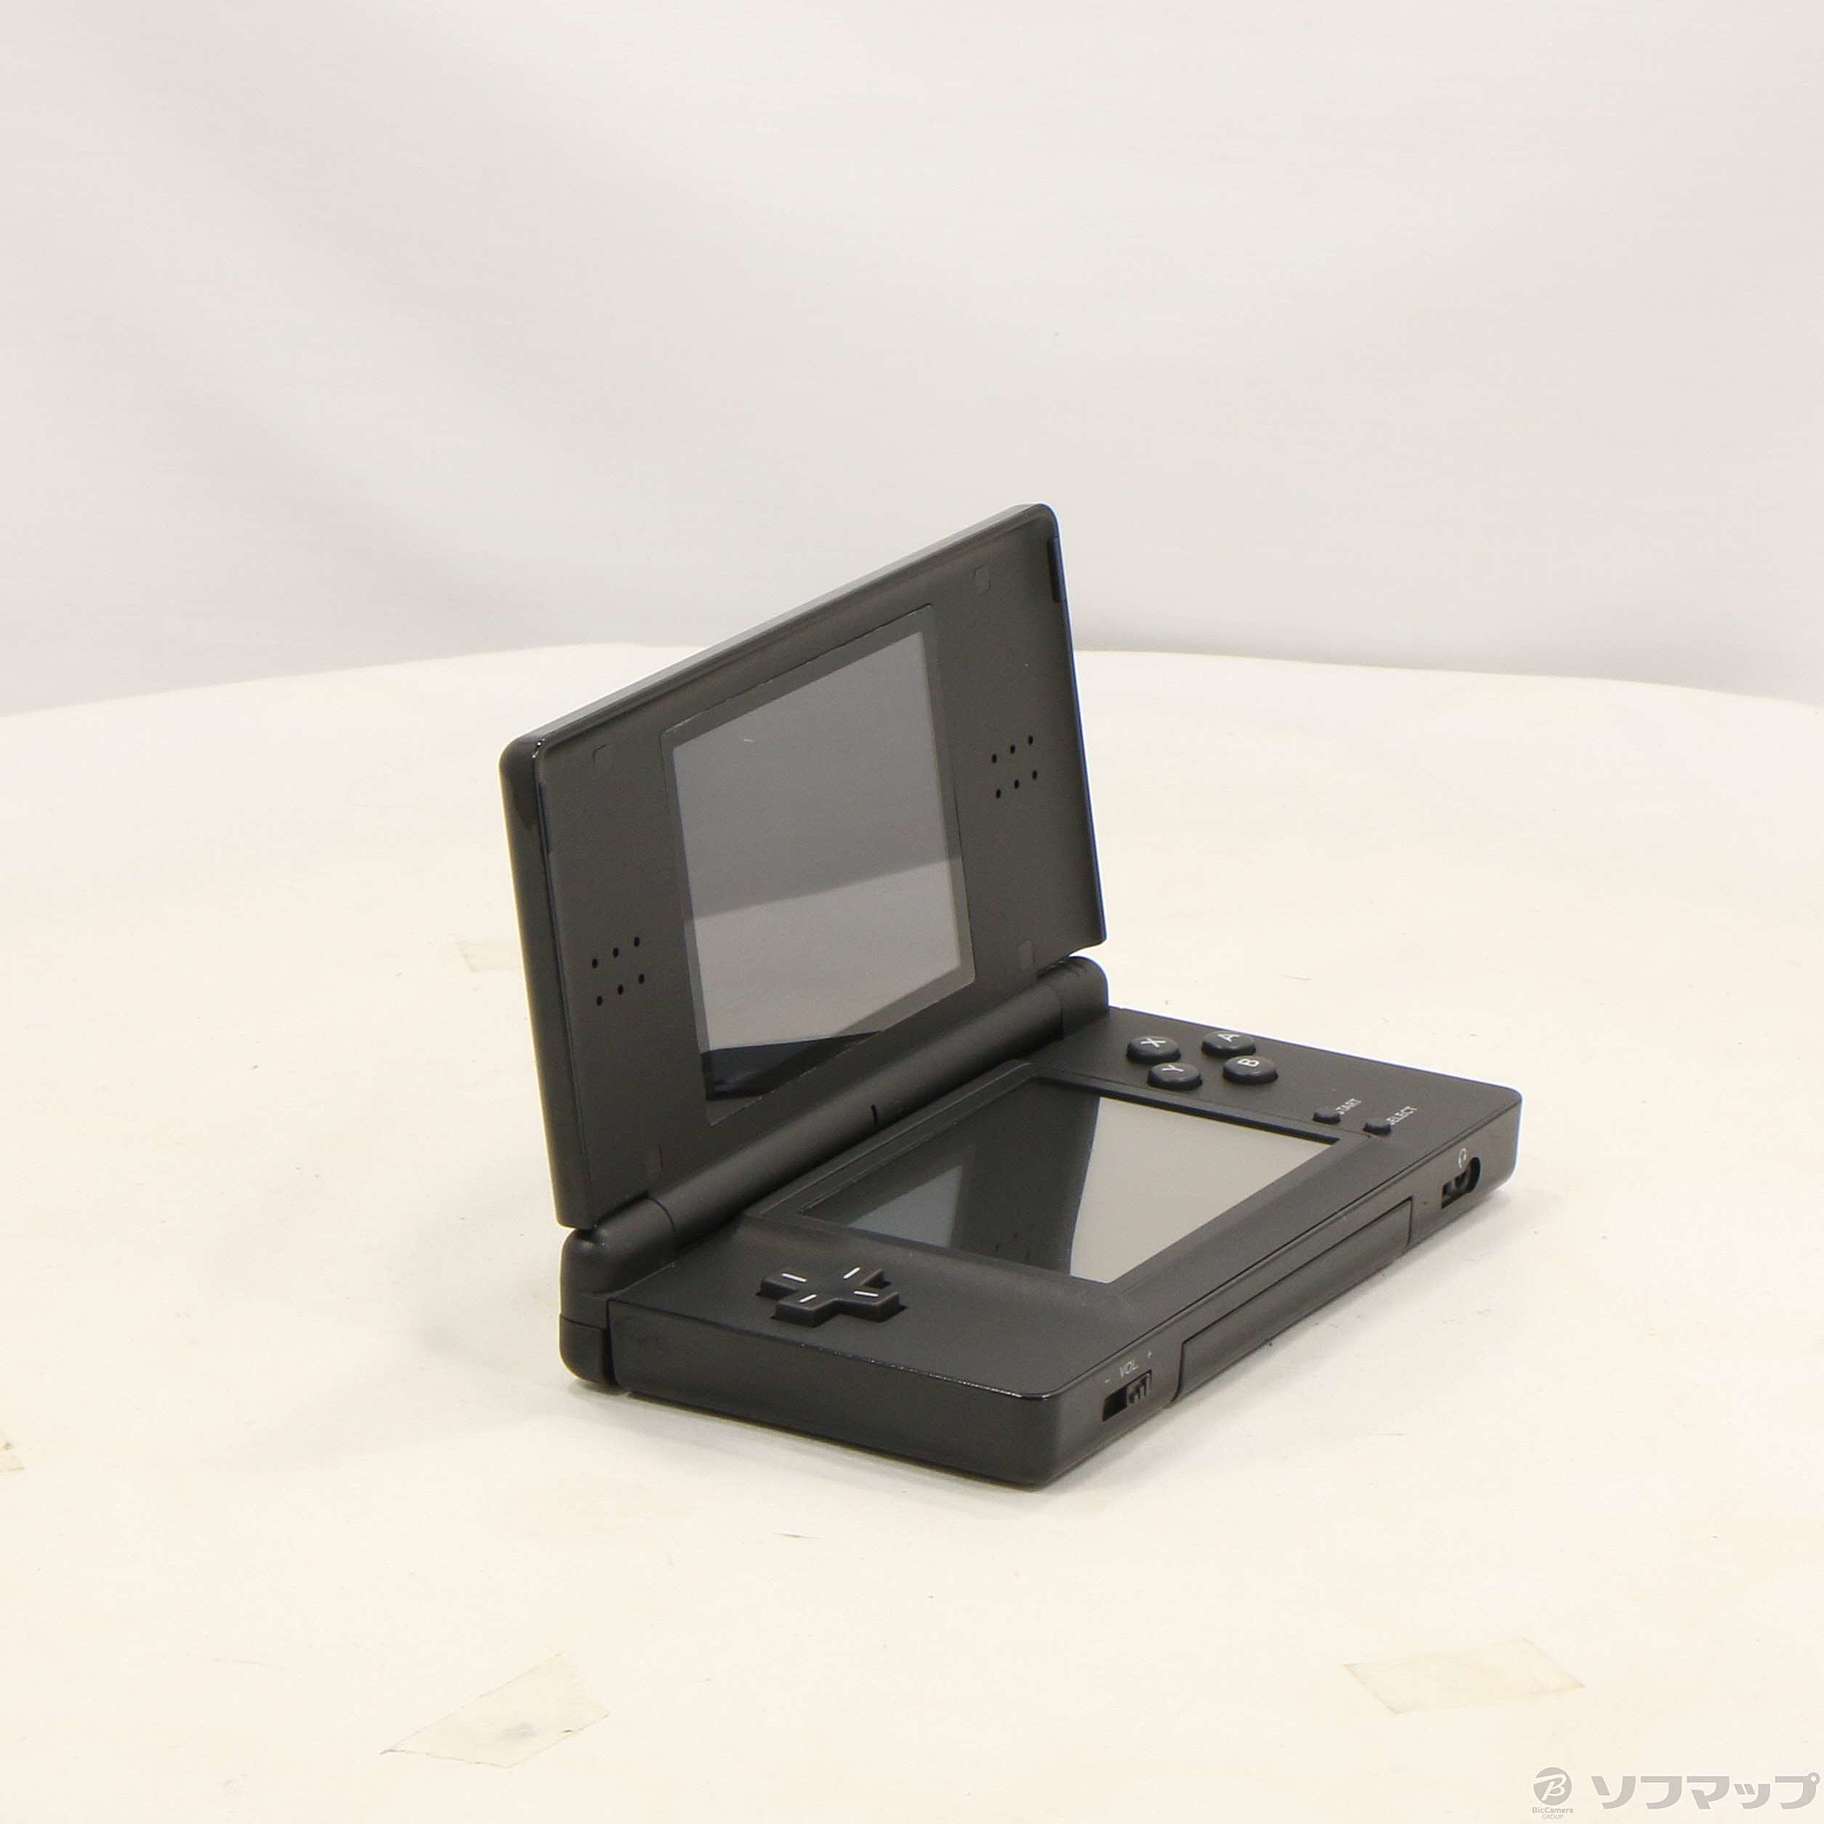 Nintendo DS lite ブラック - 携帯用ゲーム本体